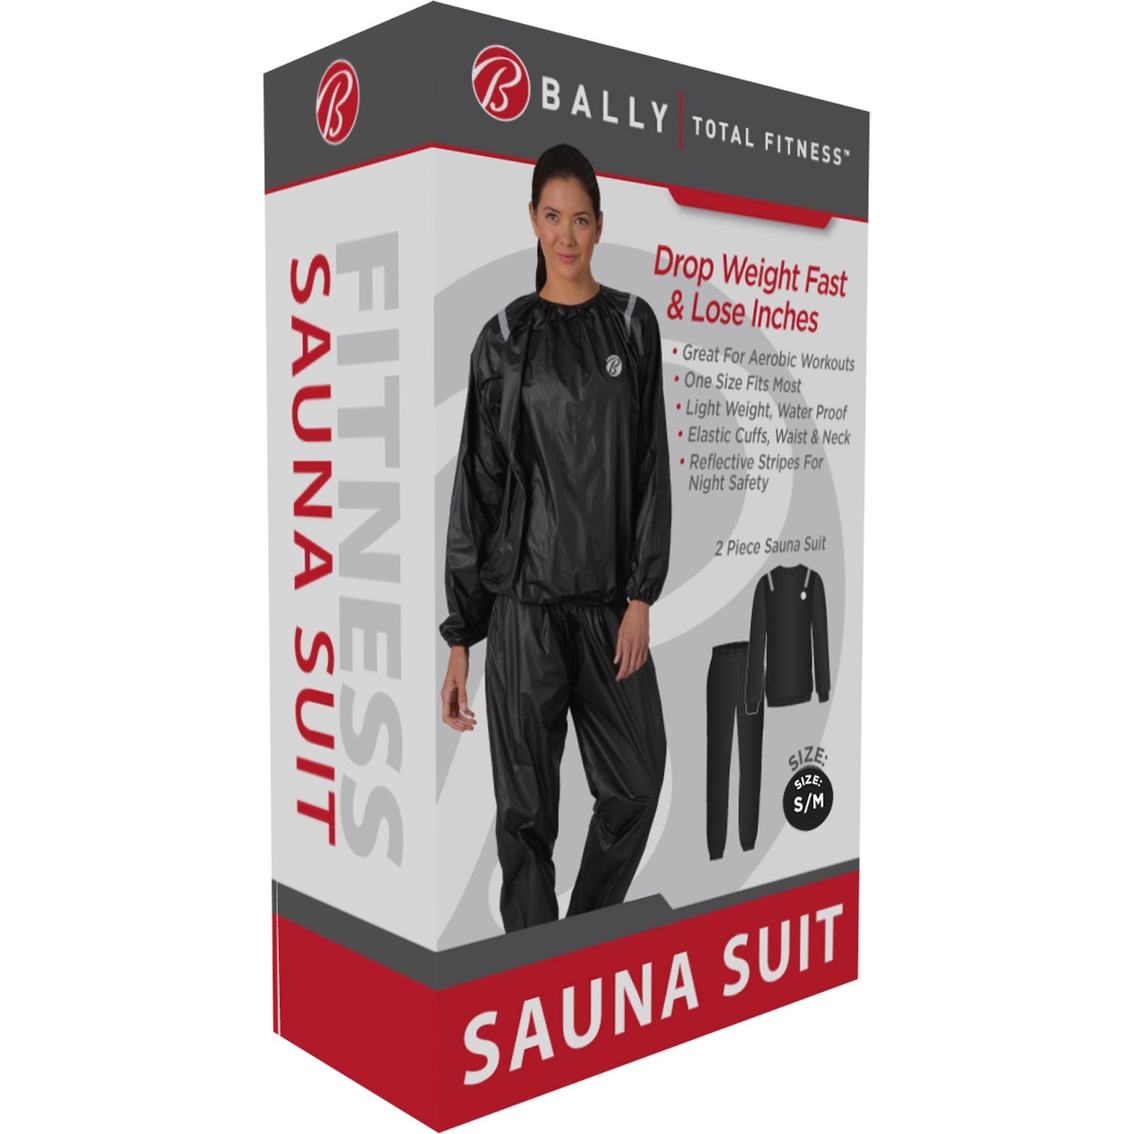 Bally Fitness Sauna Suit Deals | website.jkuat.ac.ke